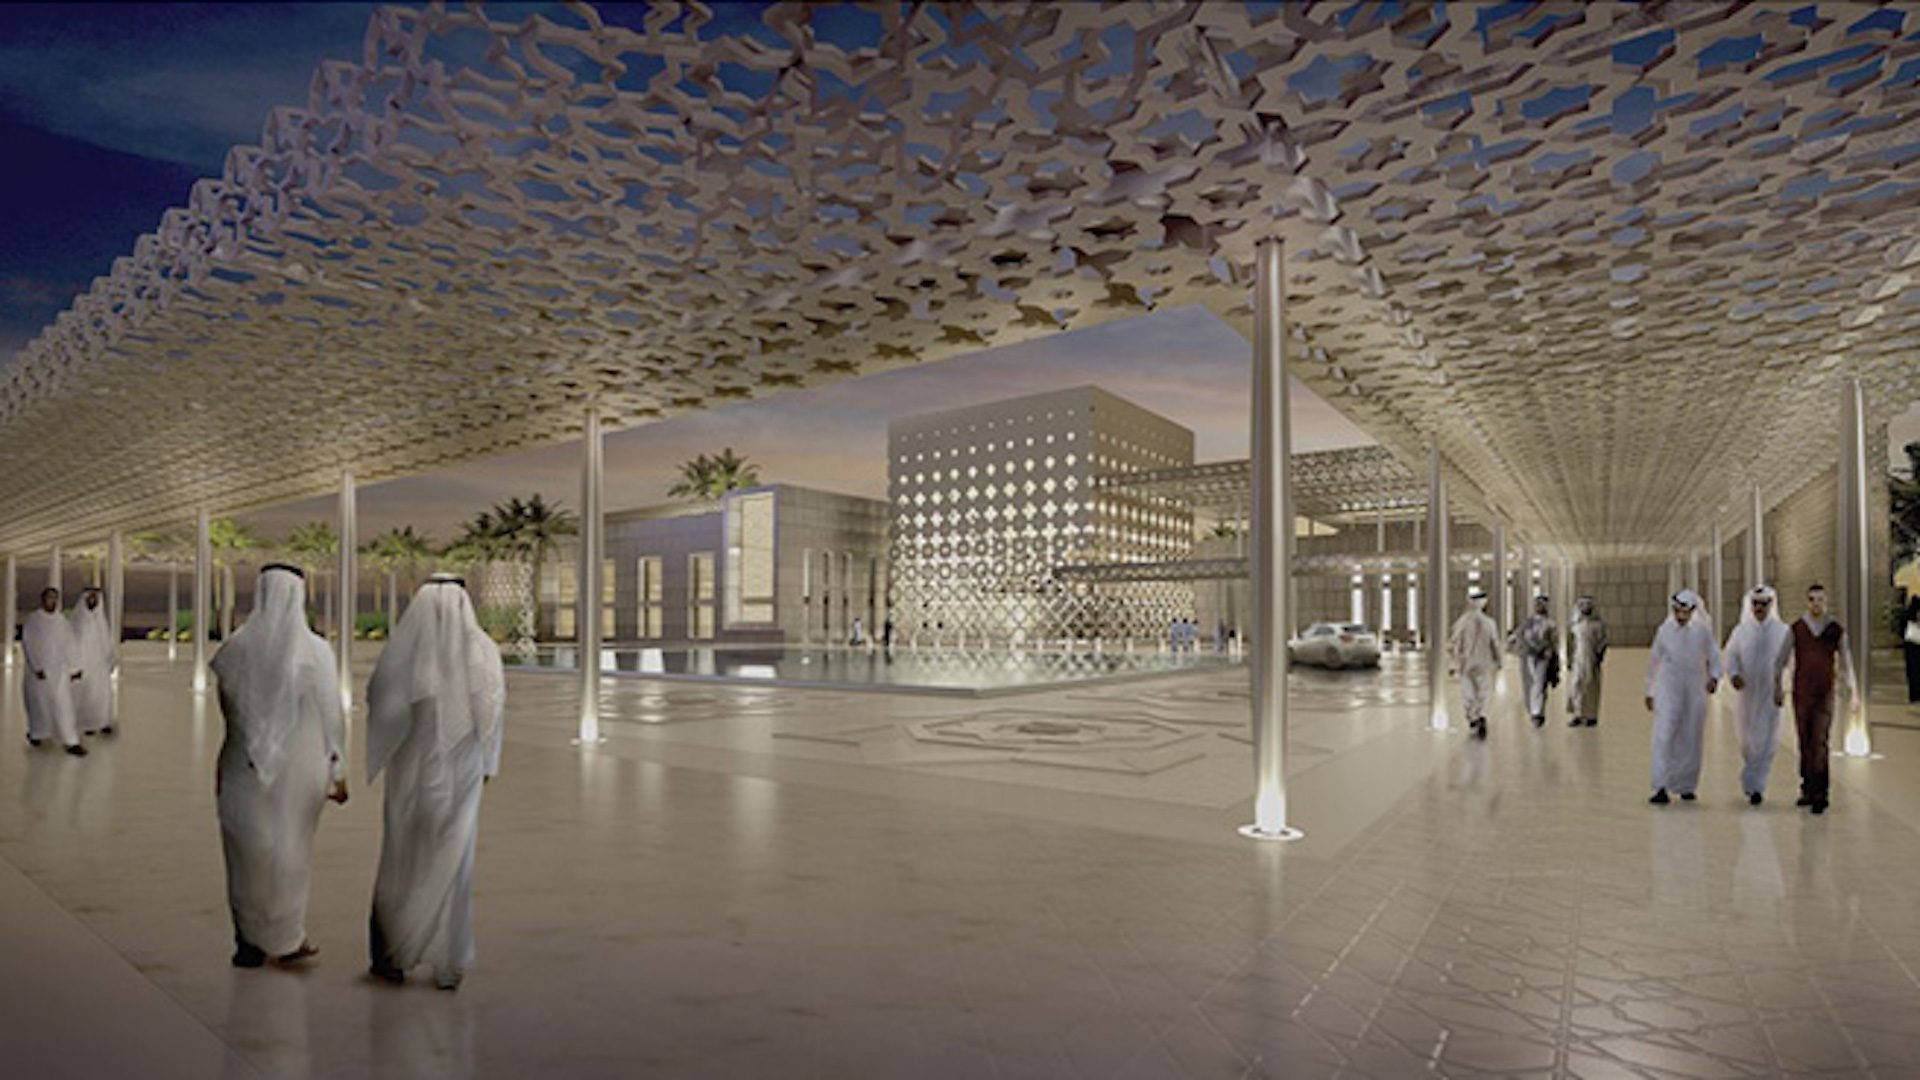 Modern Healthcare Institution In Qatar - Al Wakrah Hospital Background